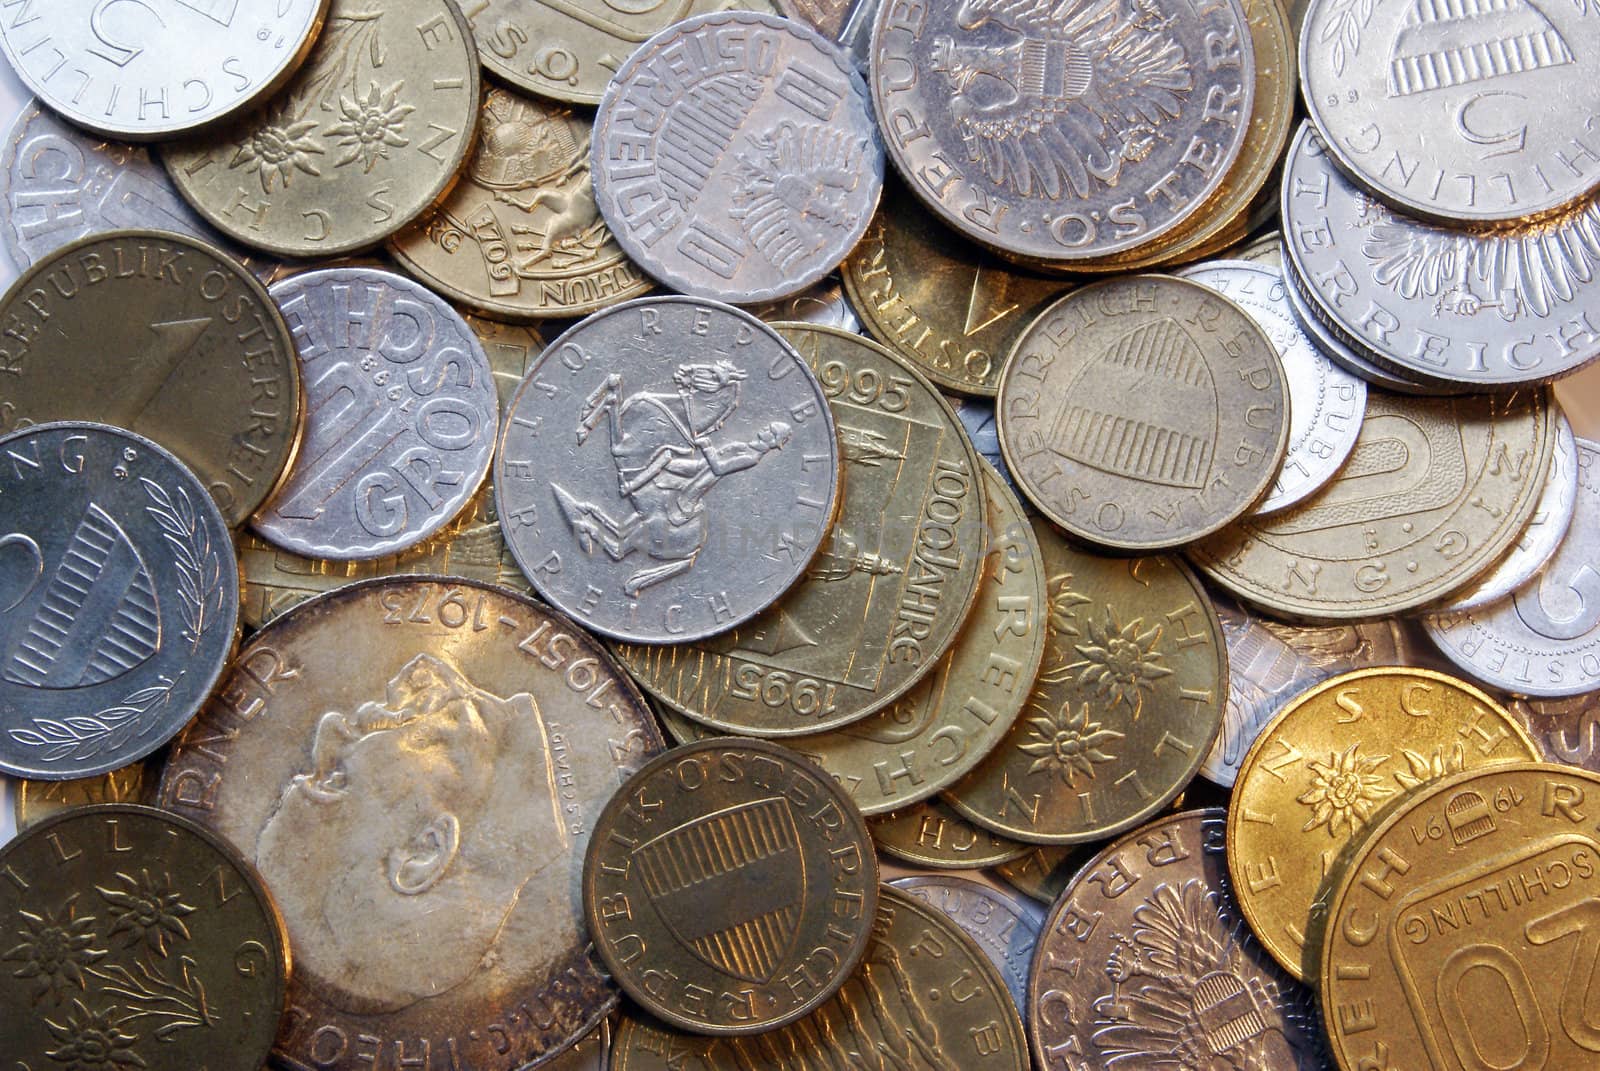 Austrian Schilling coins by calexica